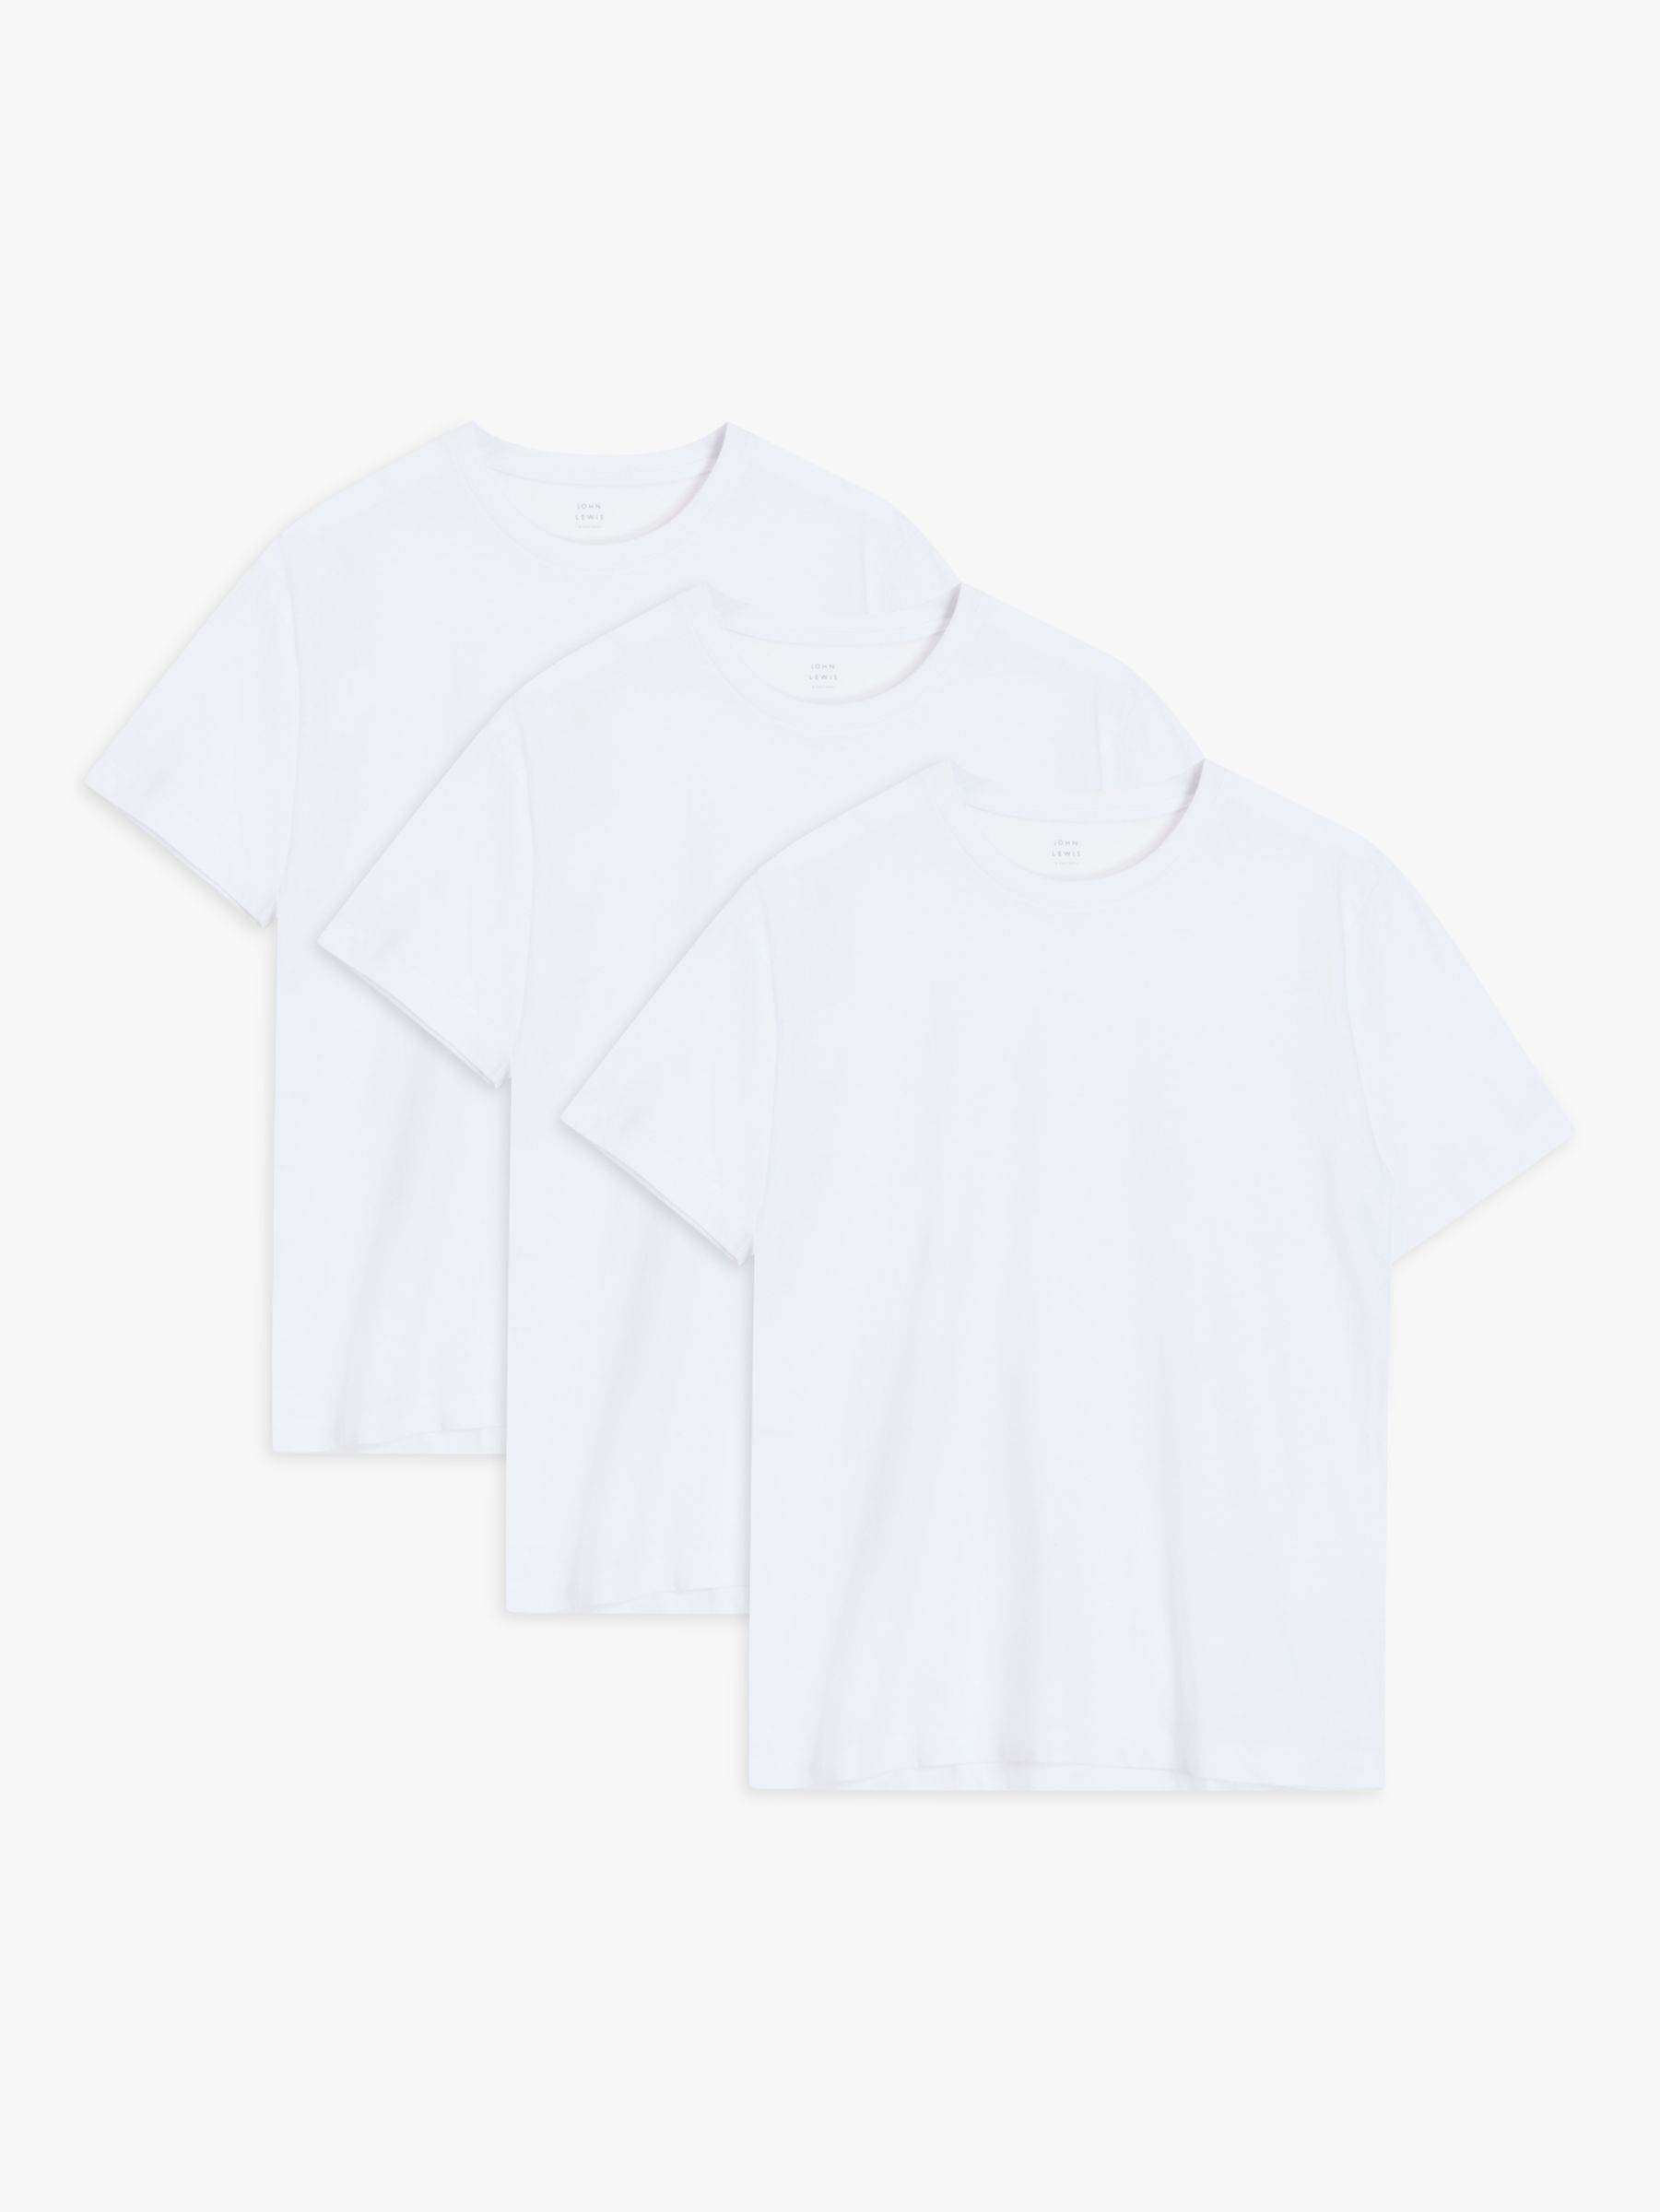 John Lewis Cotton T-Shirt, Pack of 3, White, S